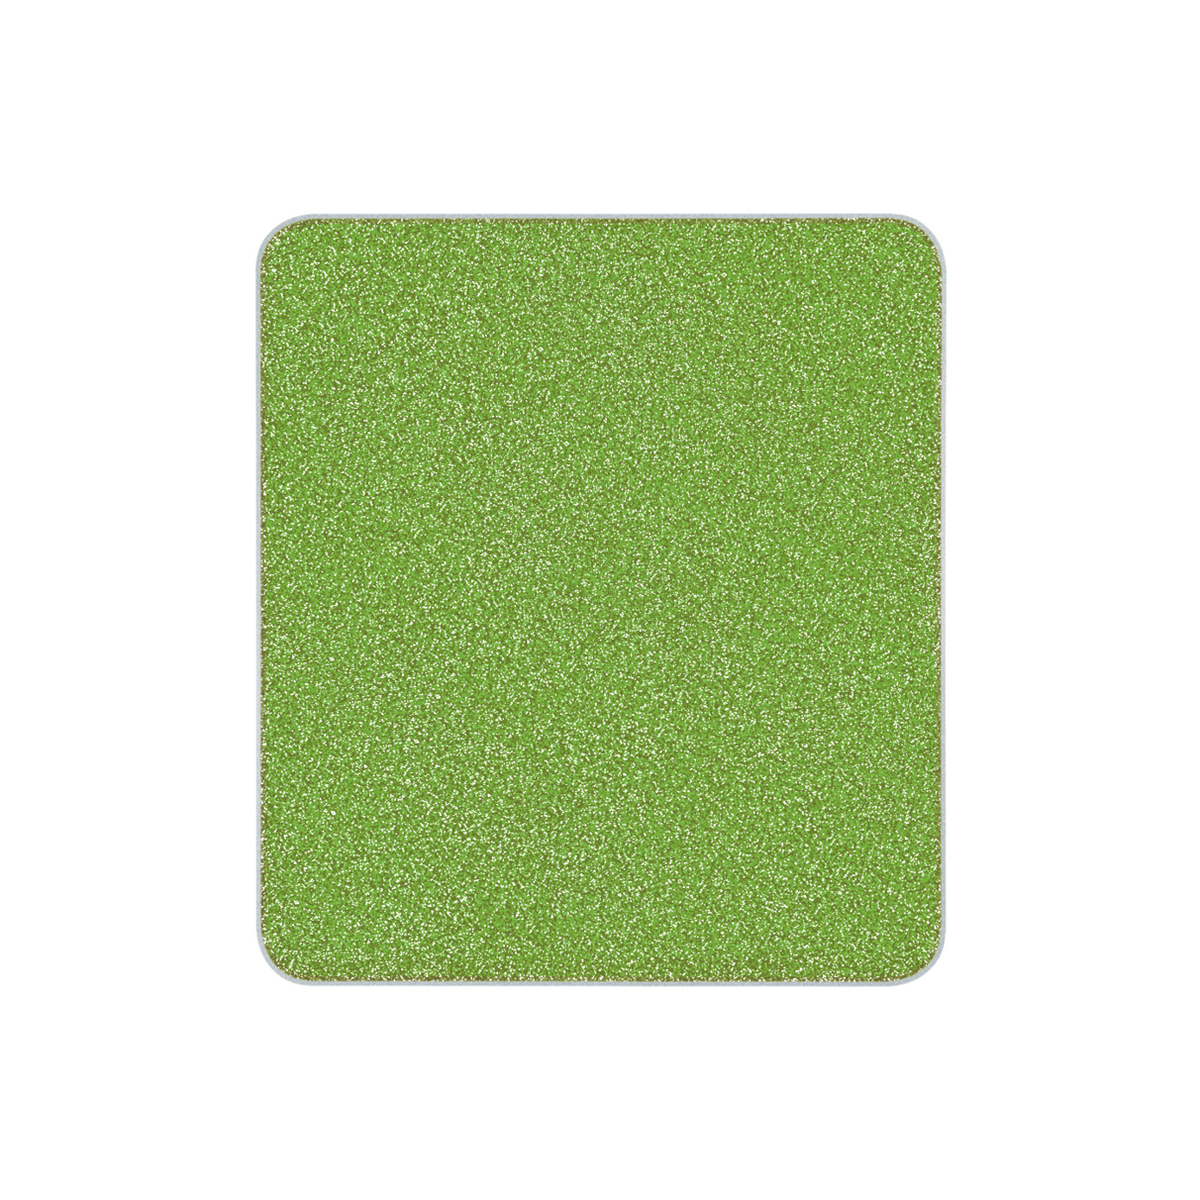 Metallic-338 Acidic Green